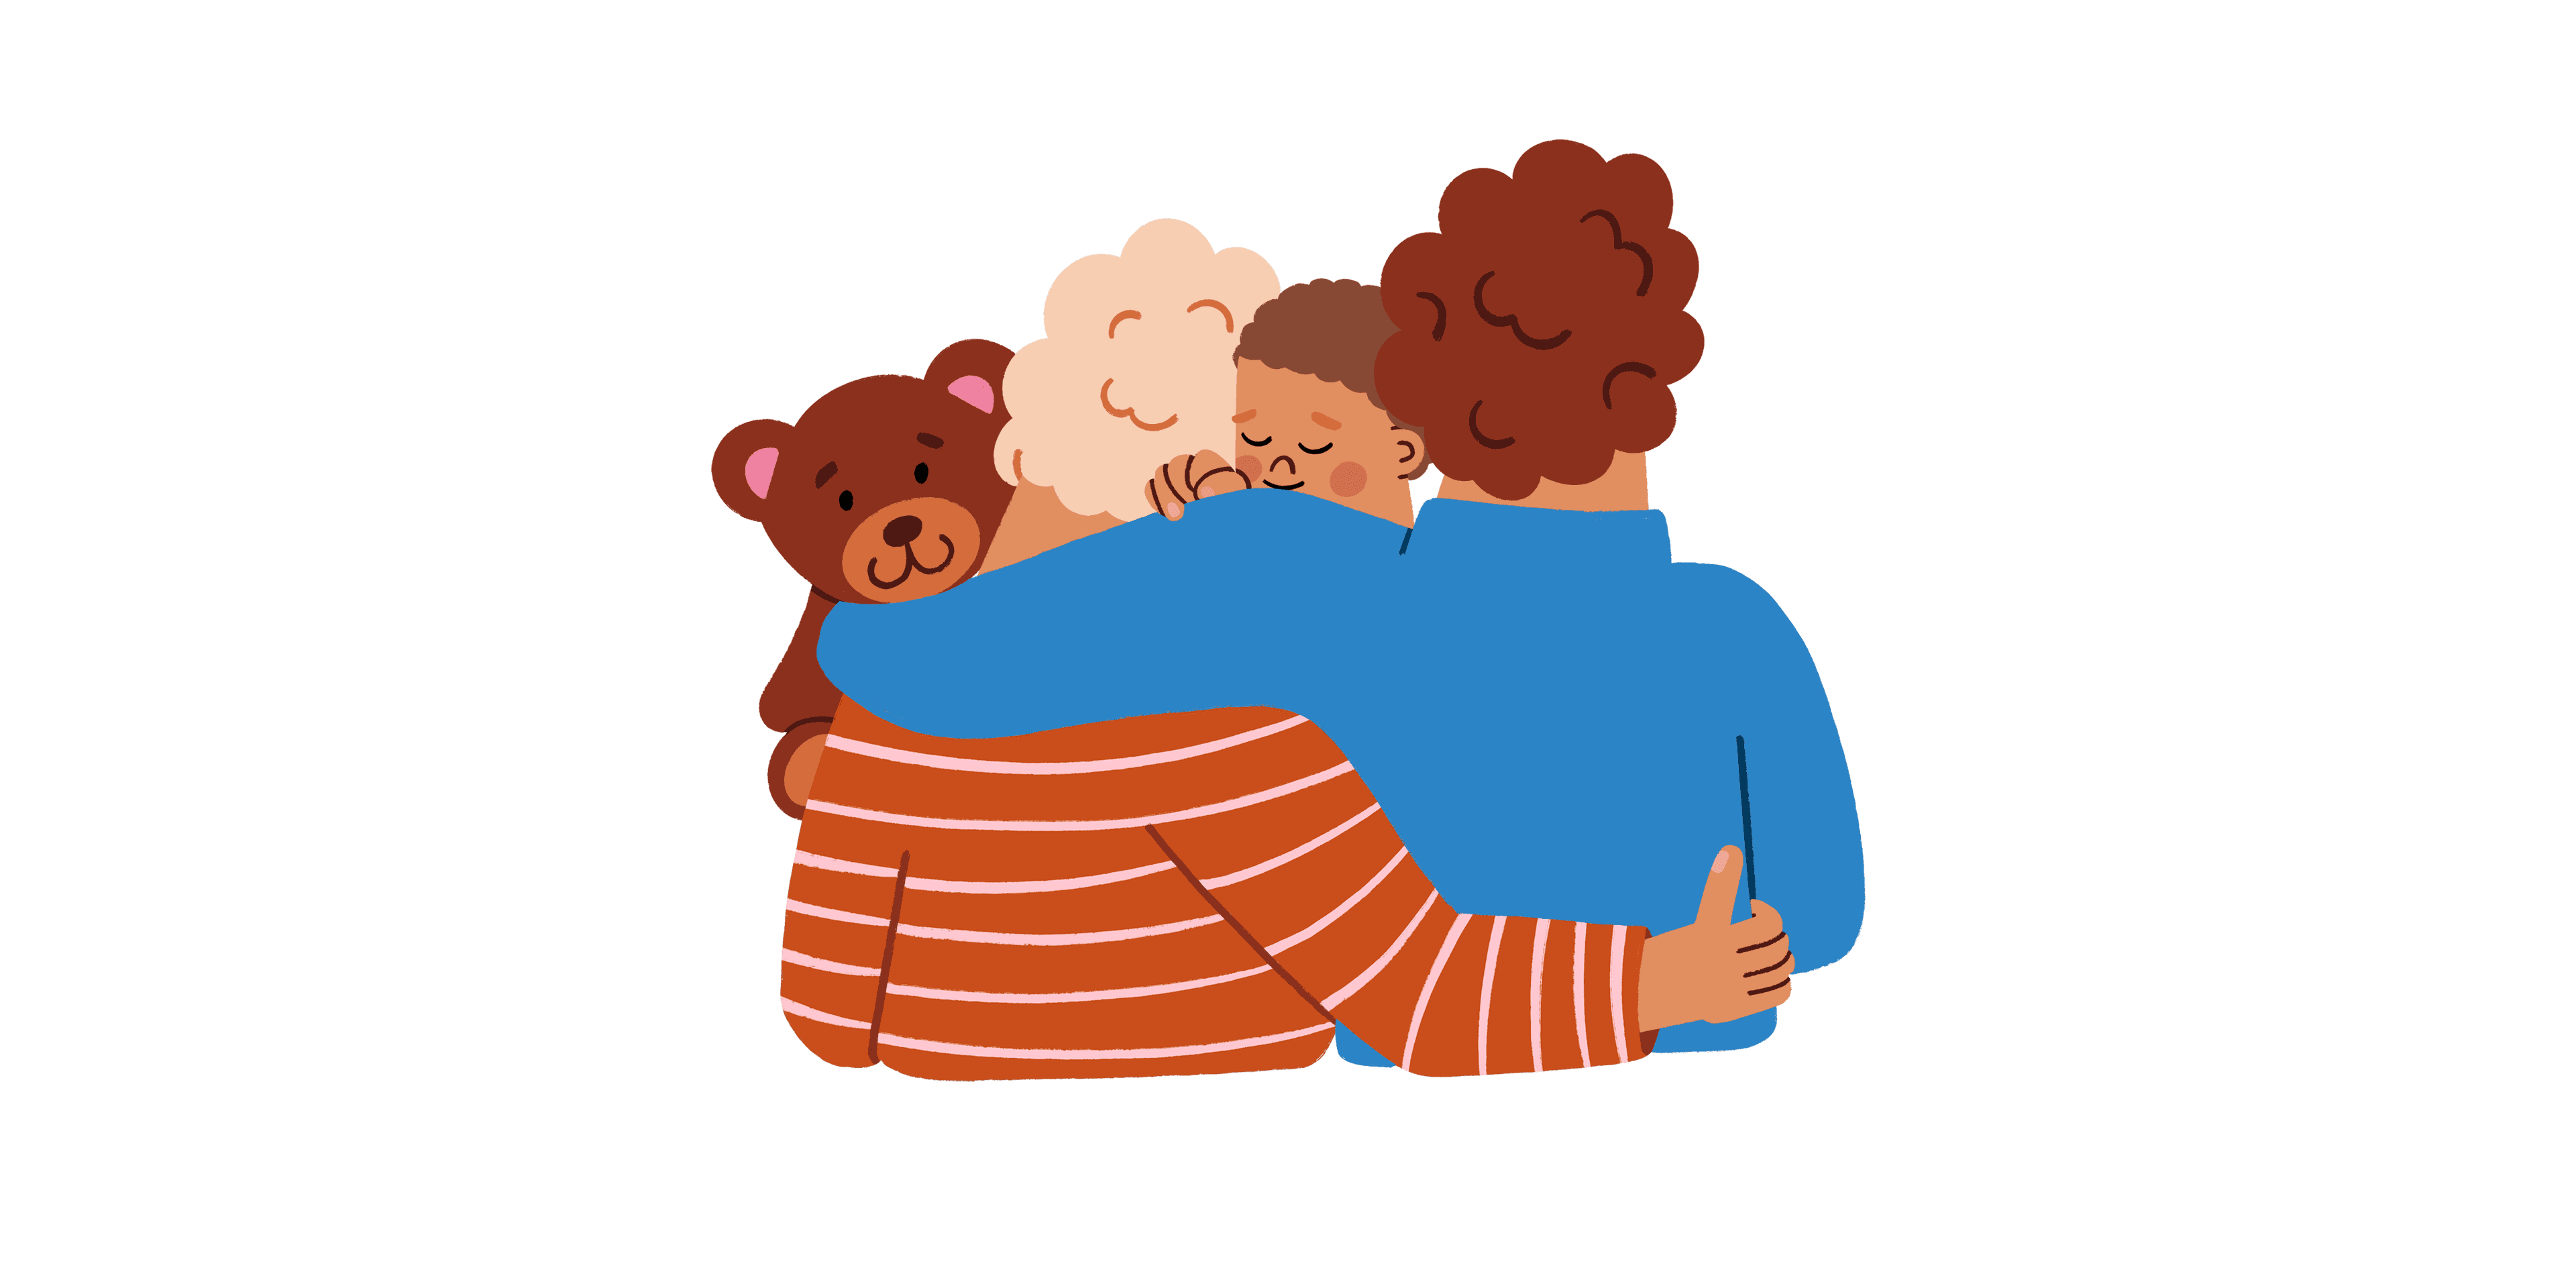 Kind wird umarmt